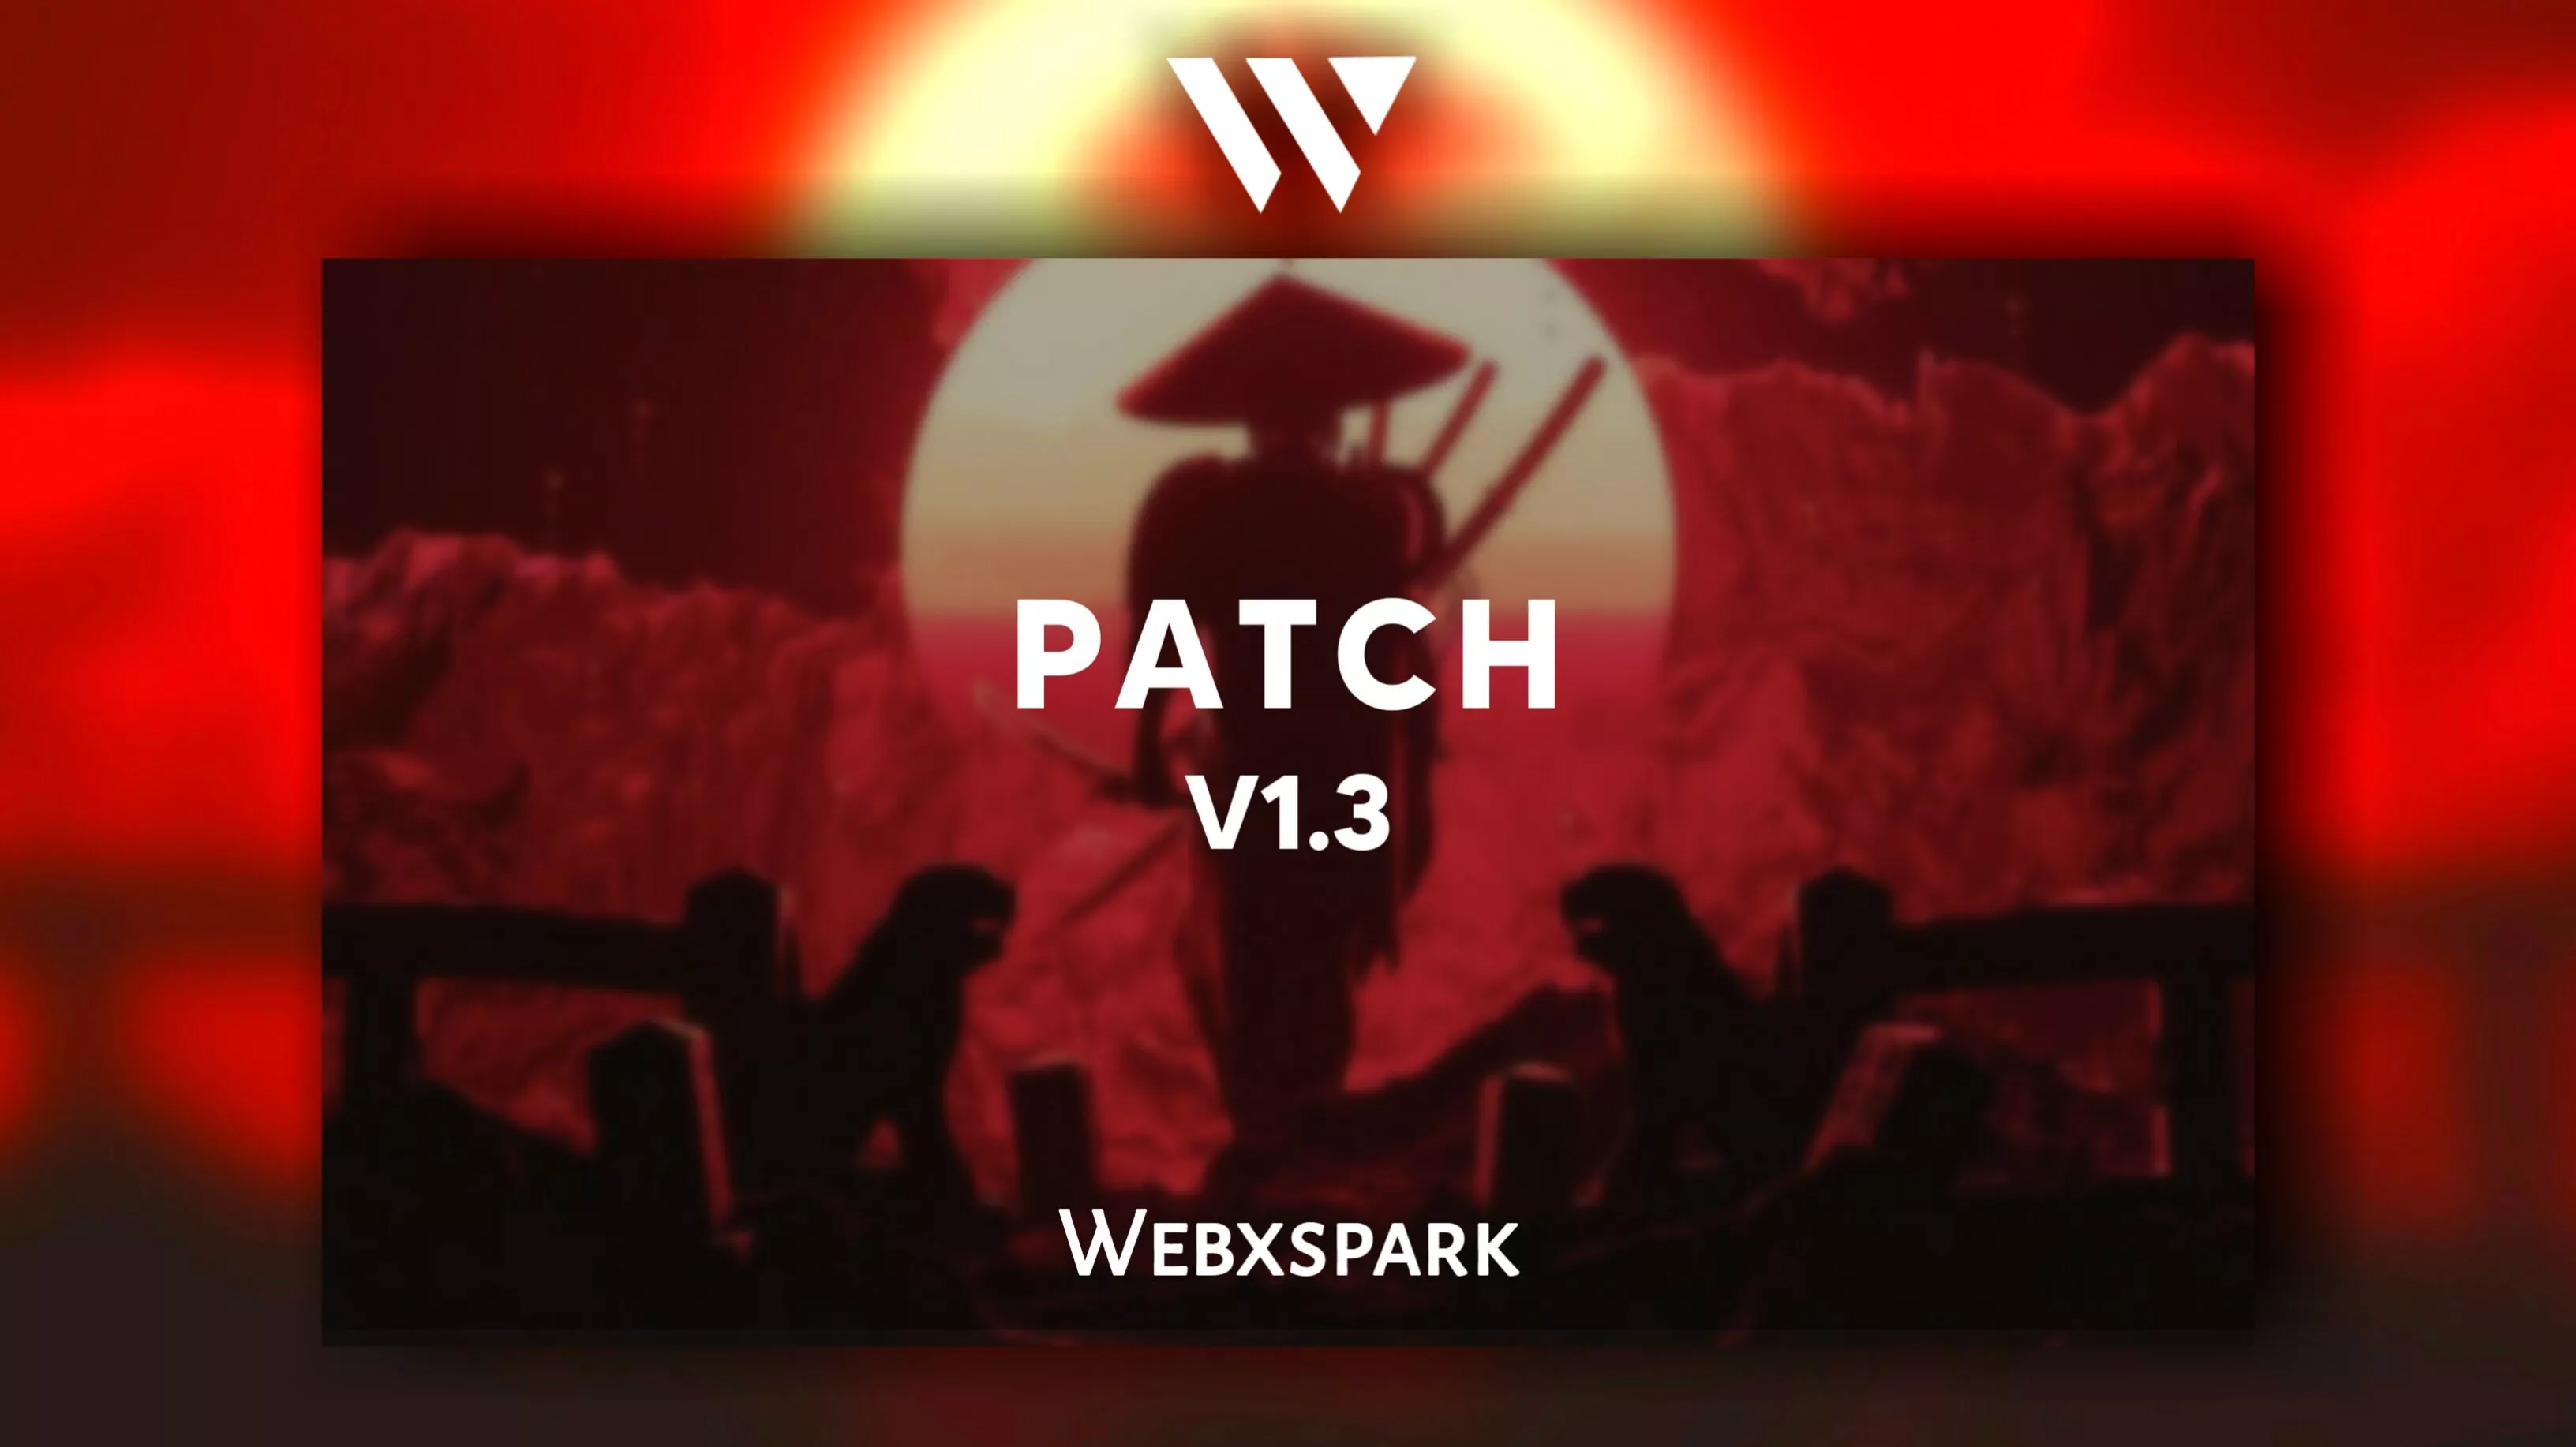 Webxspark Version 1.3 Update Patch Notes